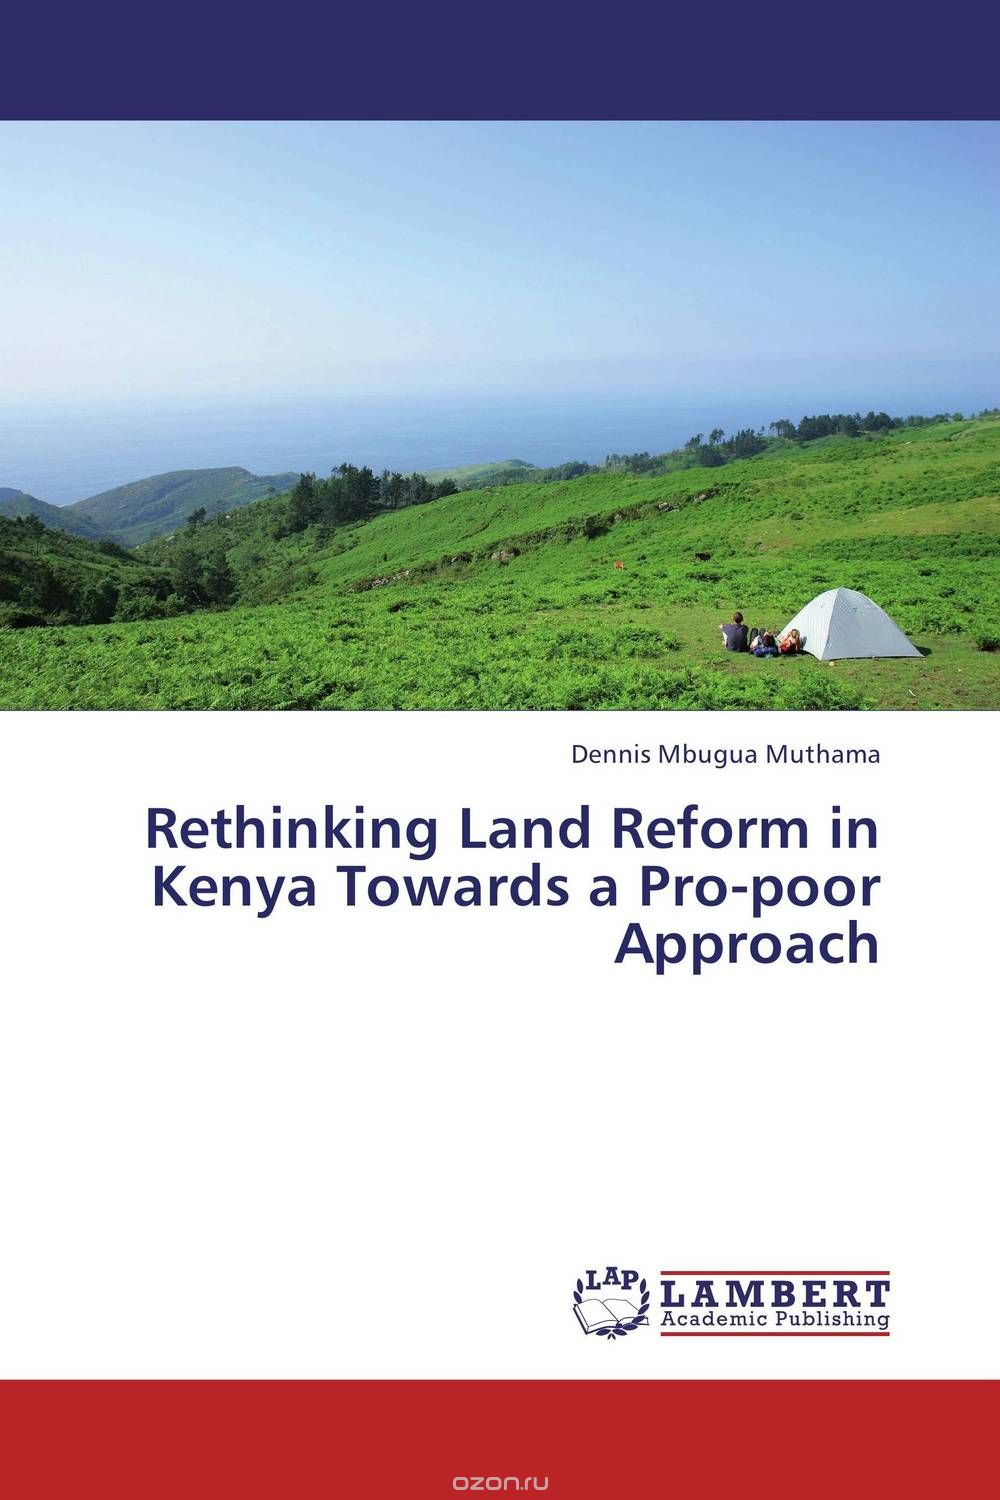 Скачать книгу "Rethinking Land Reform in Kenya Towards a Pro-poor Approach"